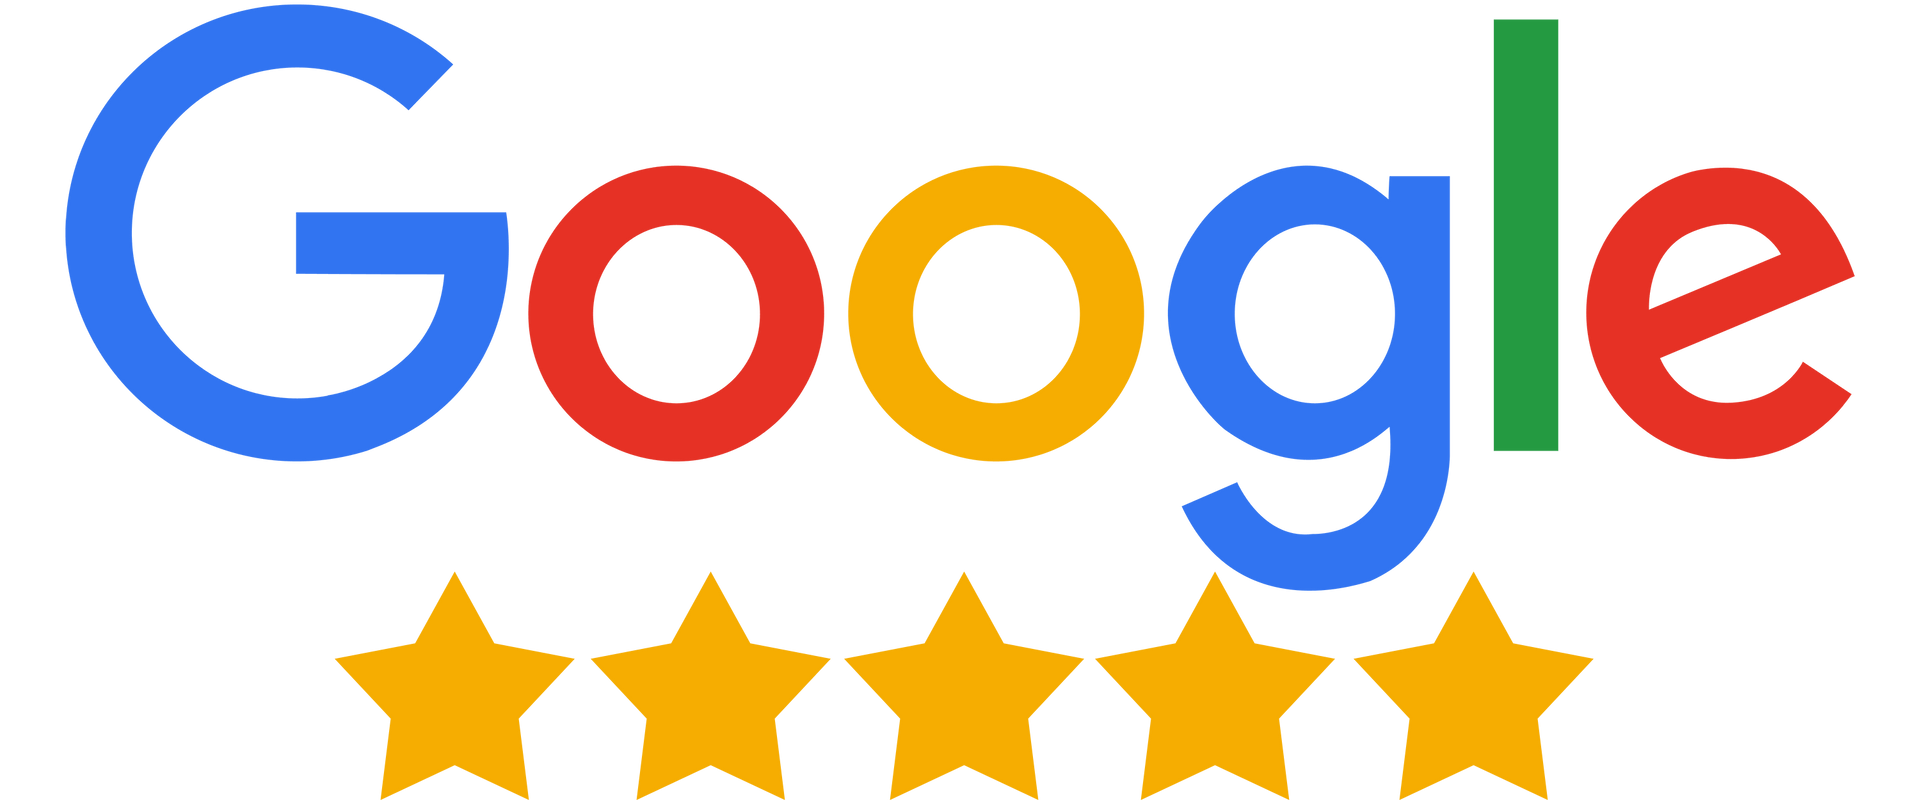 Logo google 5 étoiles